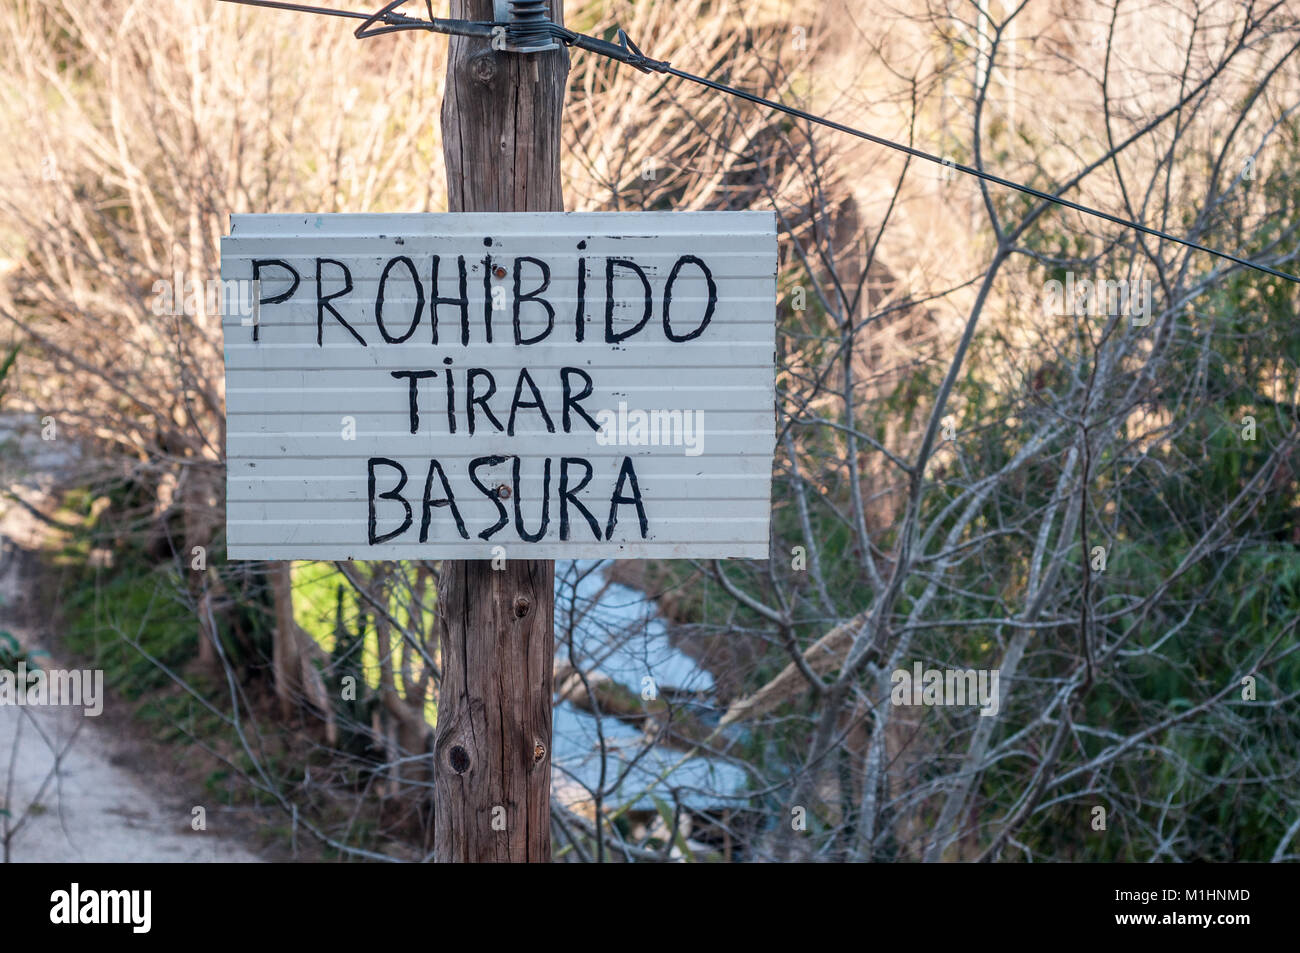 no littering sign in spanish, prohibido tirar basura, Valls, Tarragona, Catalonia, Spain Stock Photo